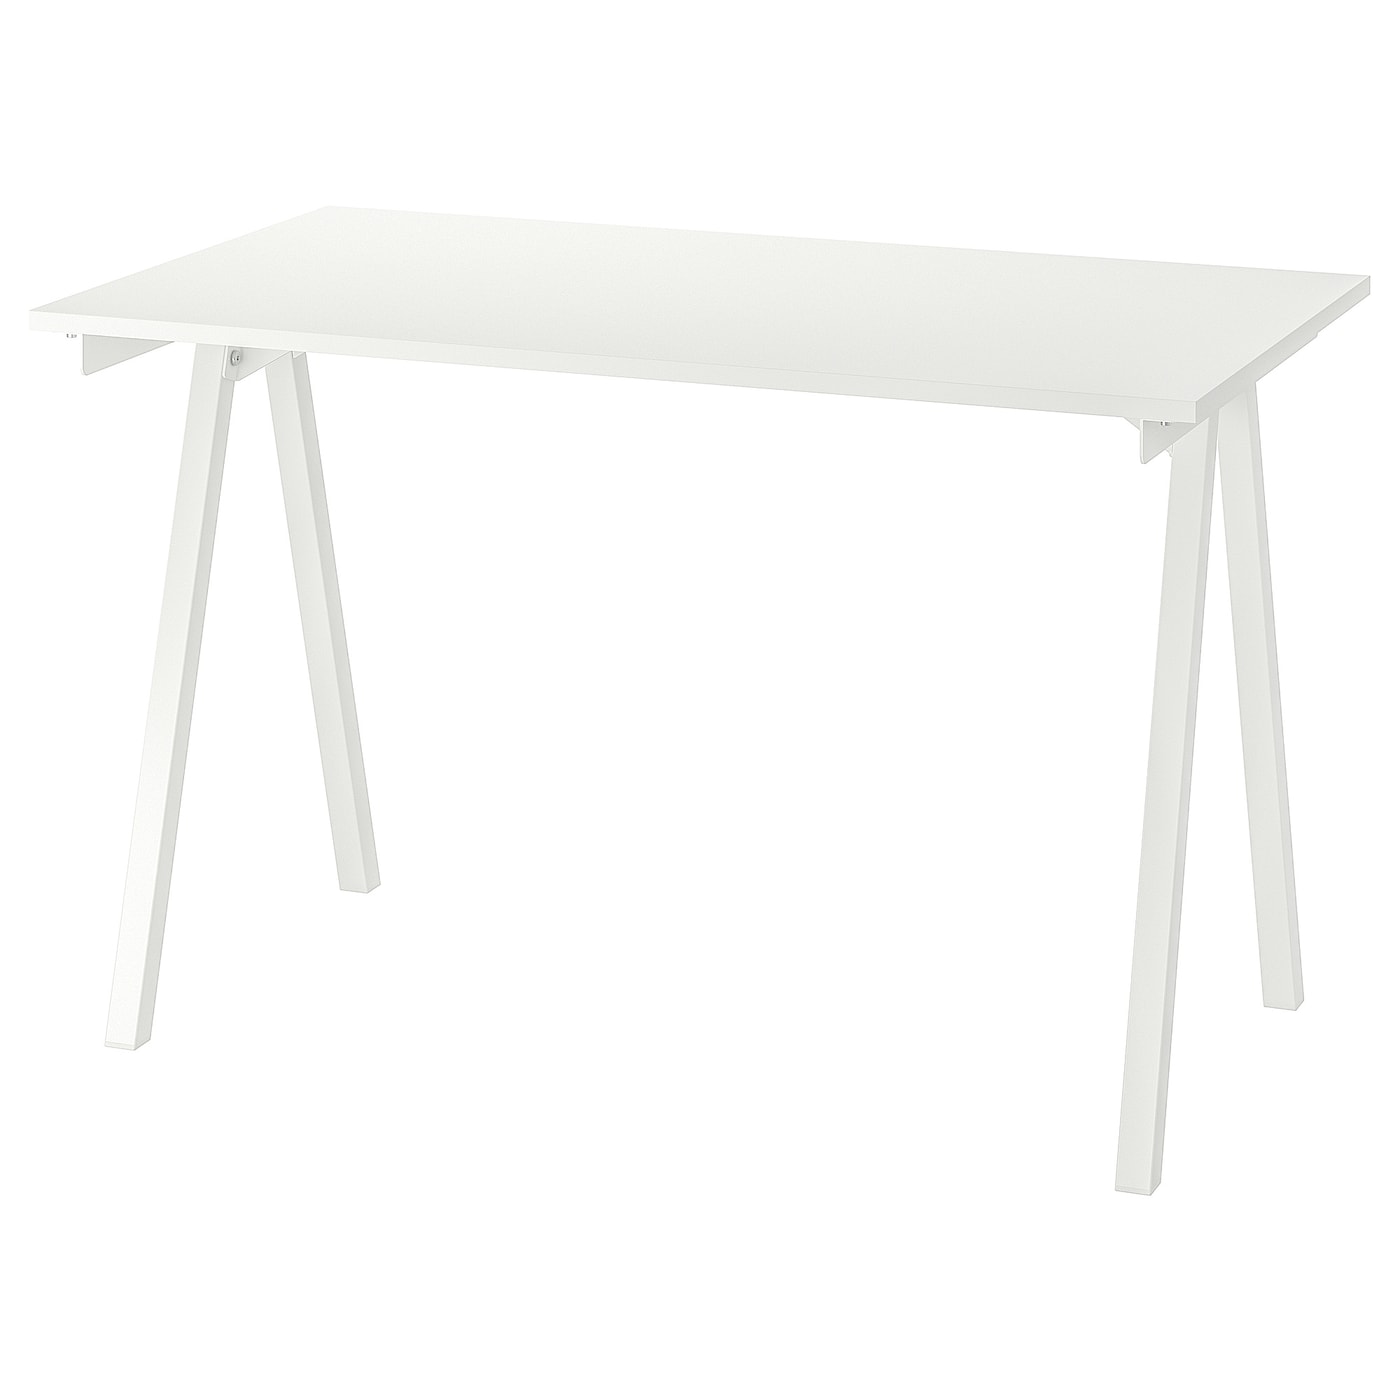 Письменный стол - IKEA TROTTEN, 120х70 см, белый, ТРОТТЕН ИКЕА